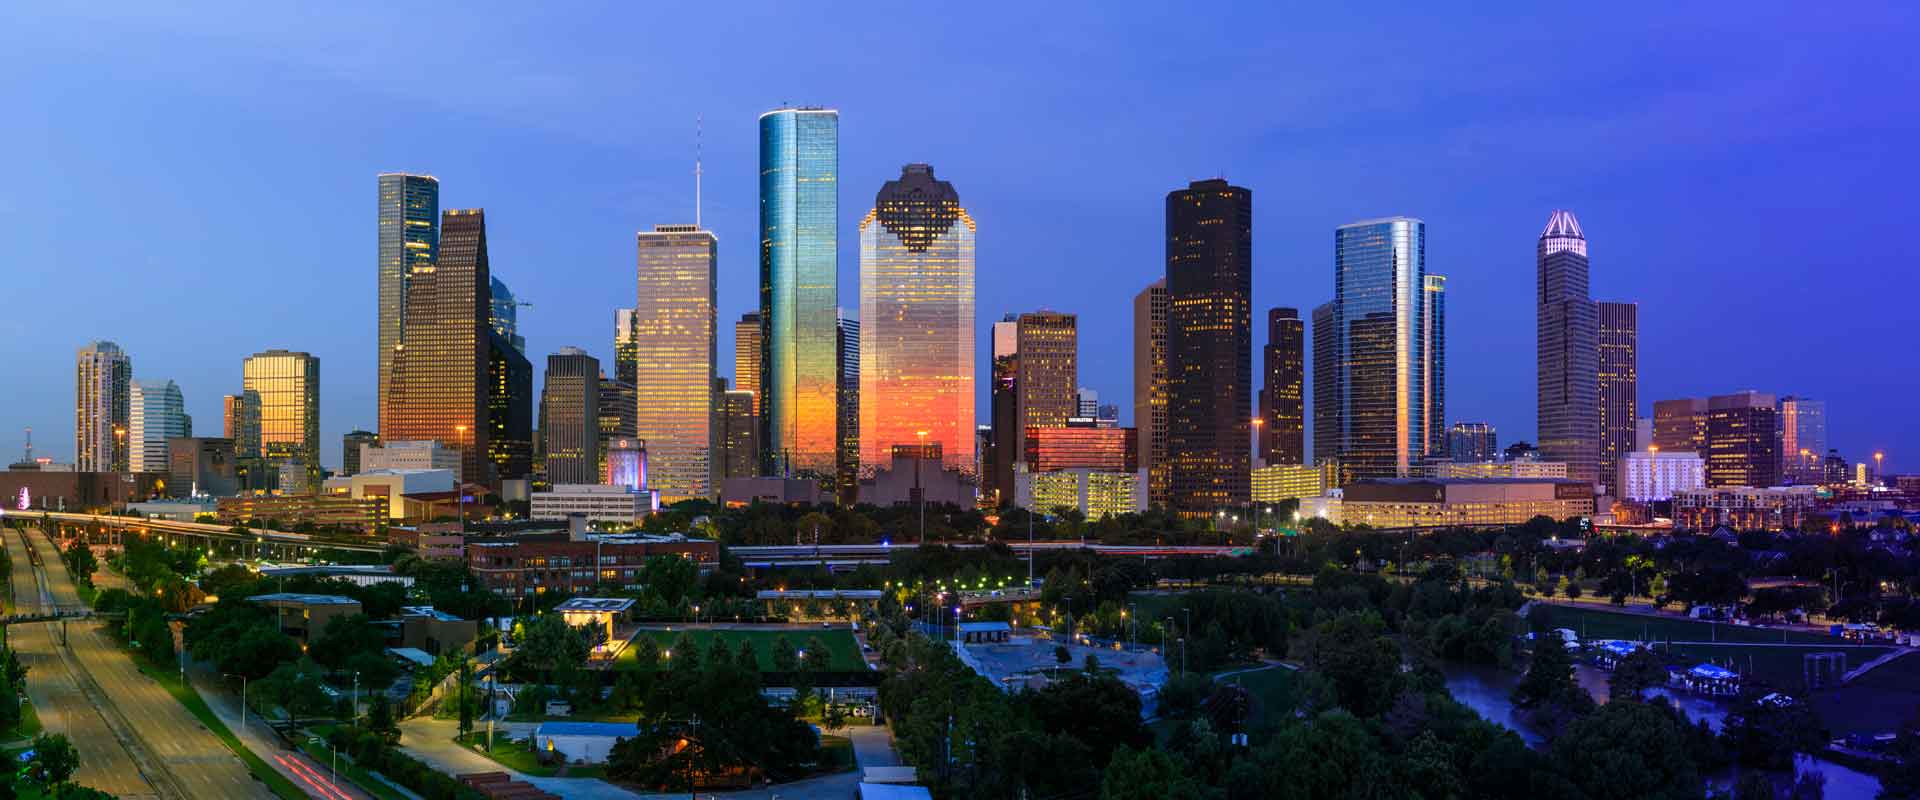 Signature Inn Houston Galleria | Houston Reasonable Rates Newly Remodeled